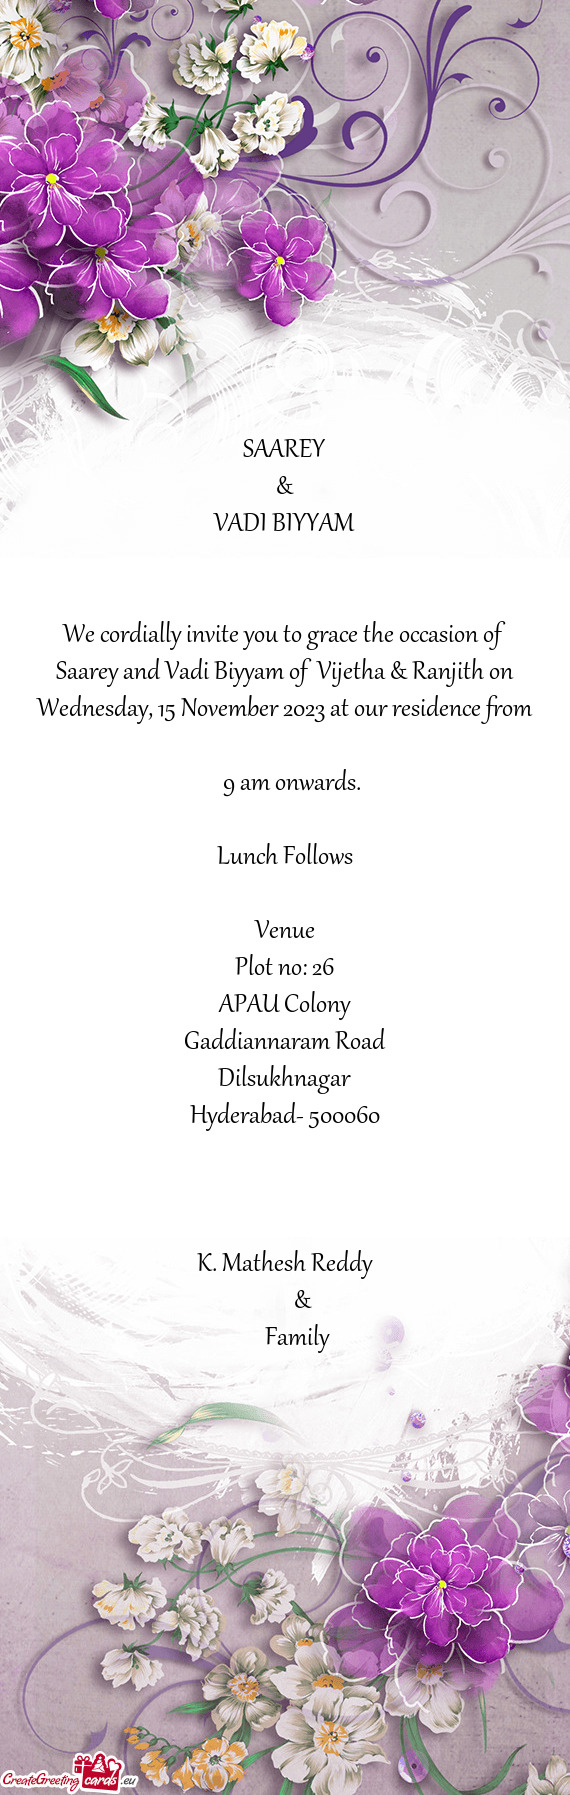 We cordially invite you to grace the occasion of Saarey and Vadi Biyyam of Vijetha & Ranjith on Wed